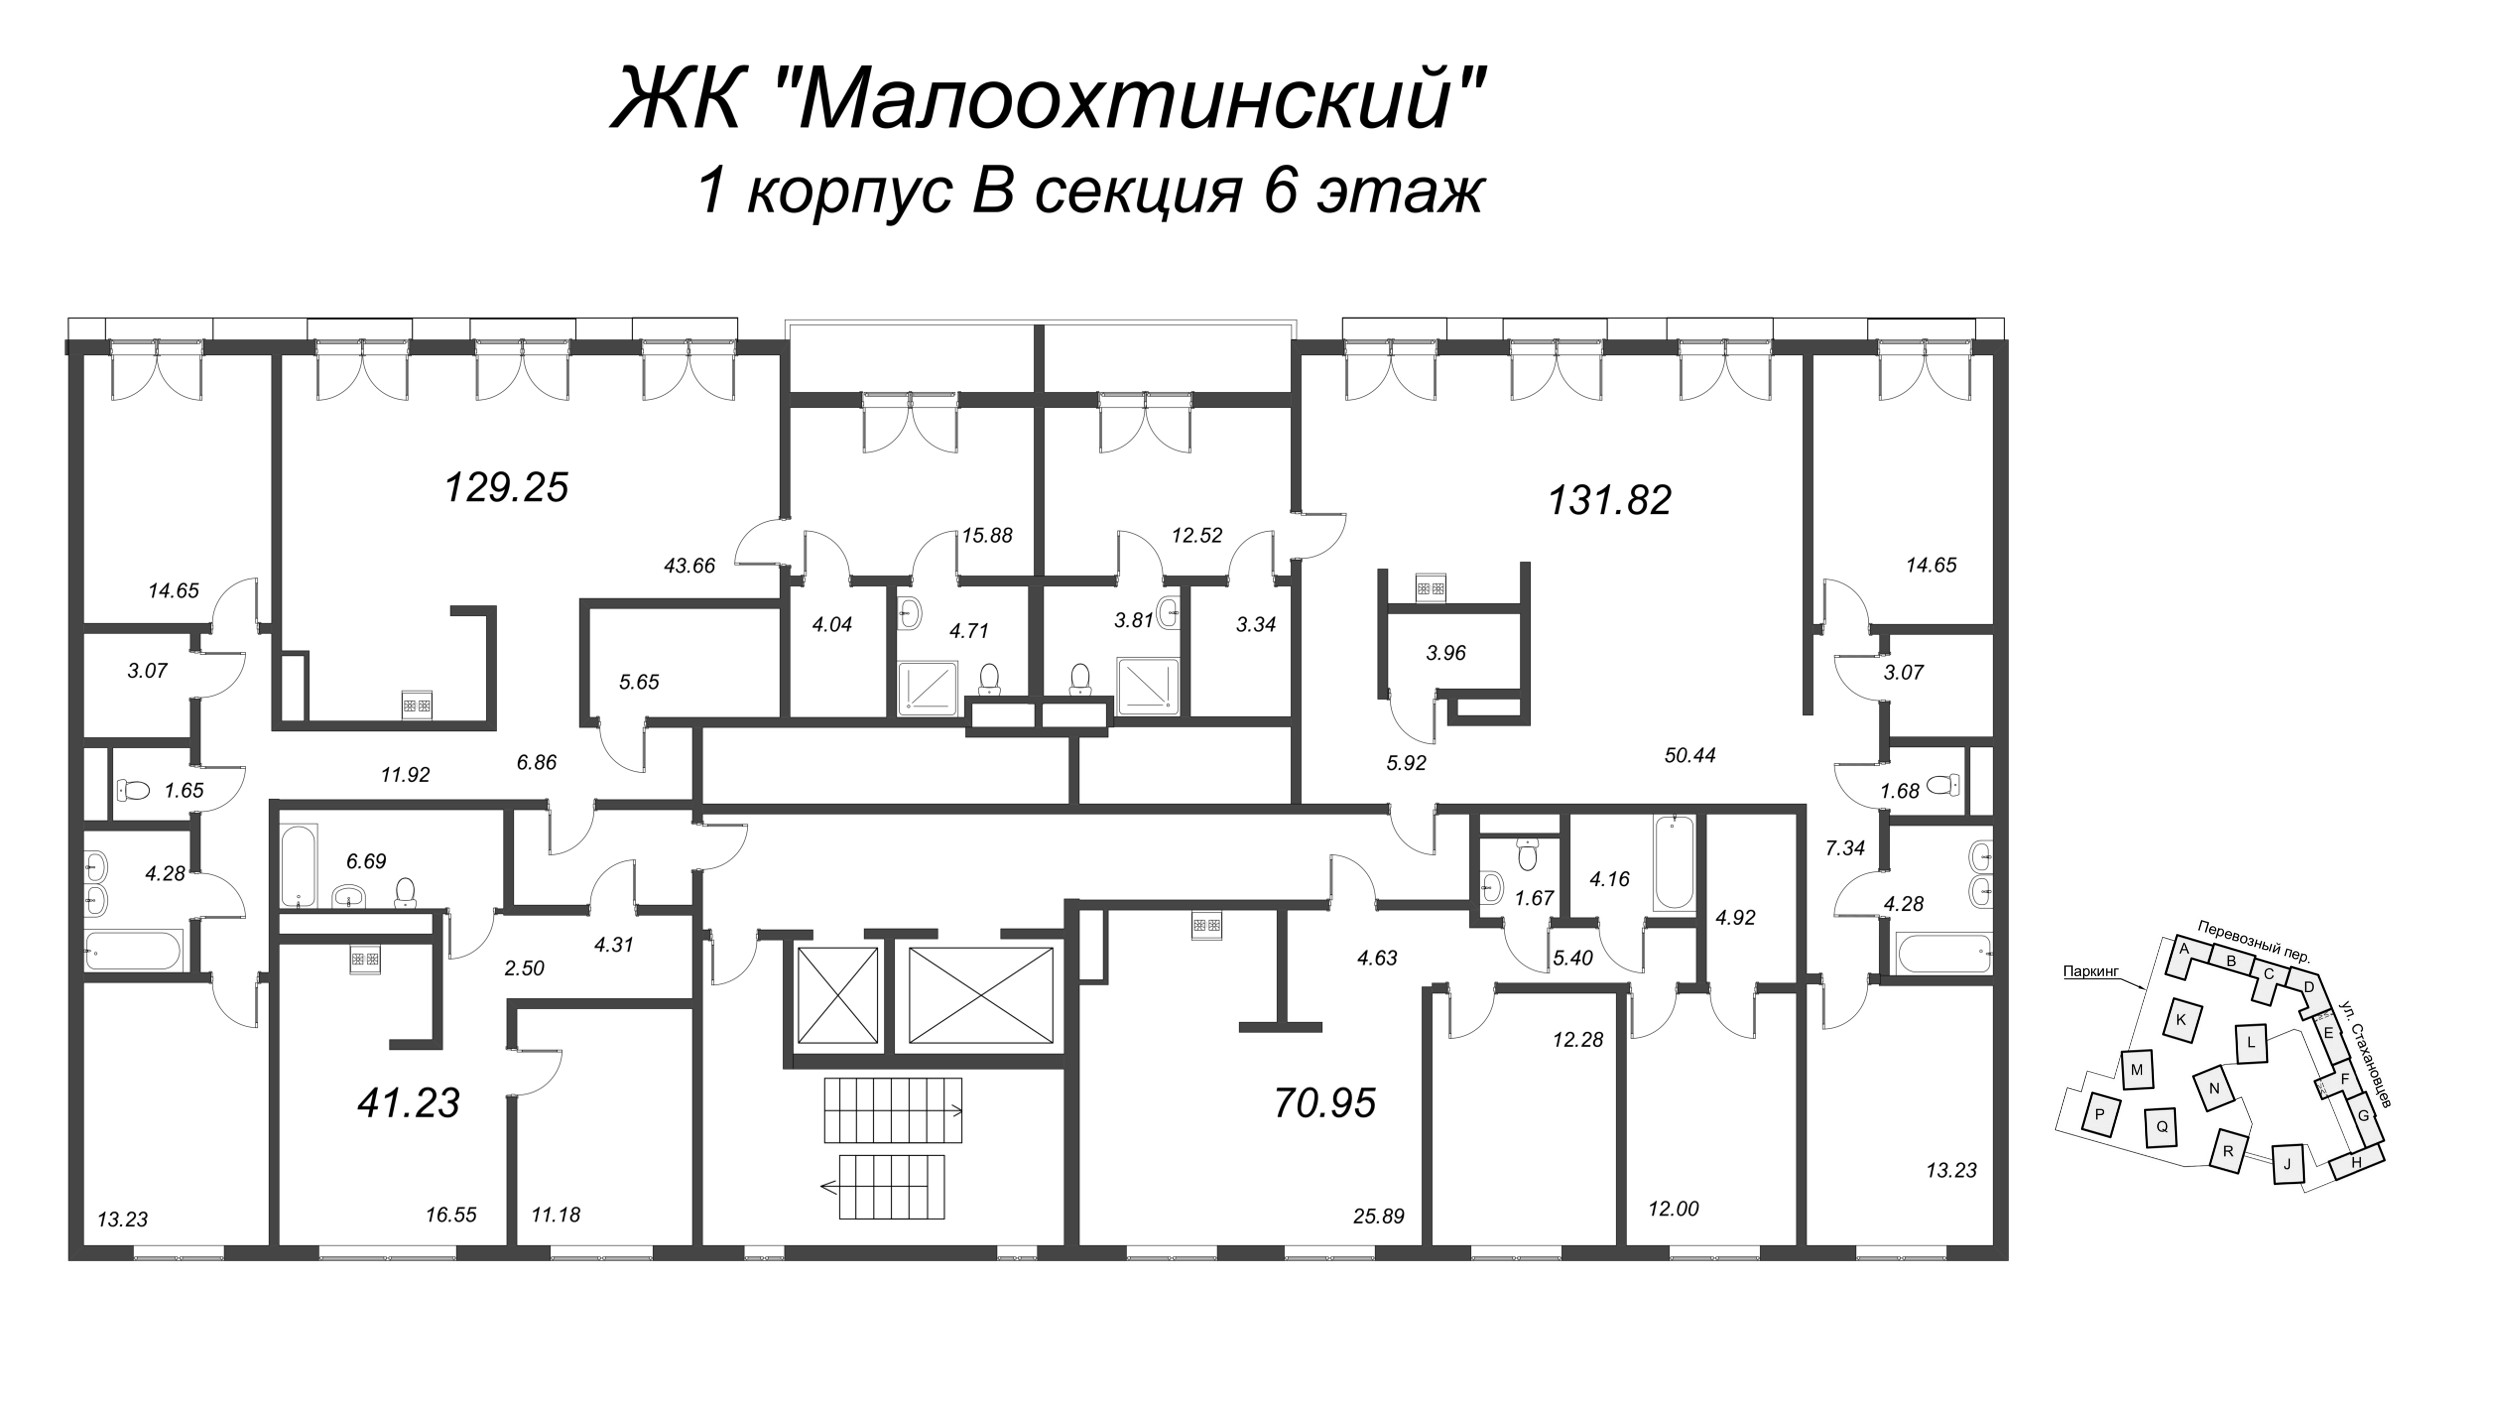 4-комнатная (Евро) квартира, 127.3 м² - планировка этажа